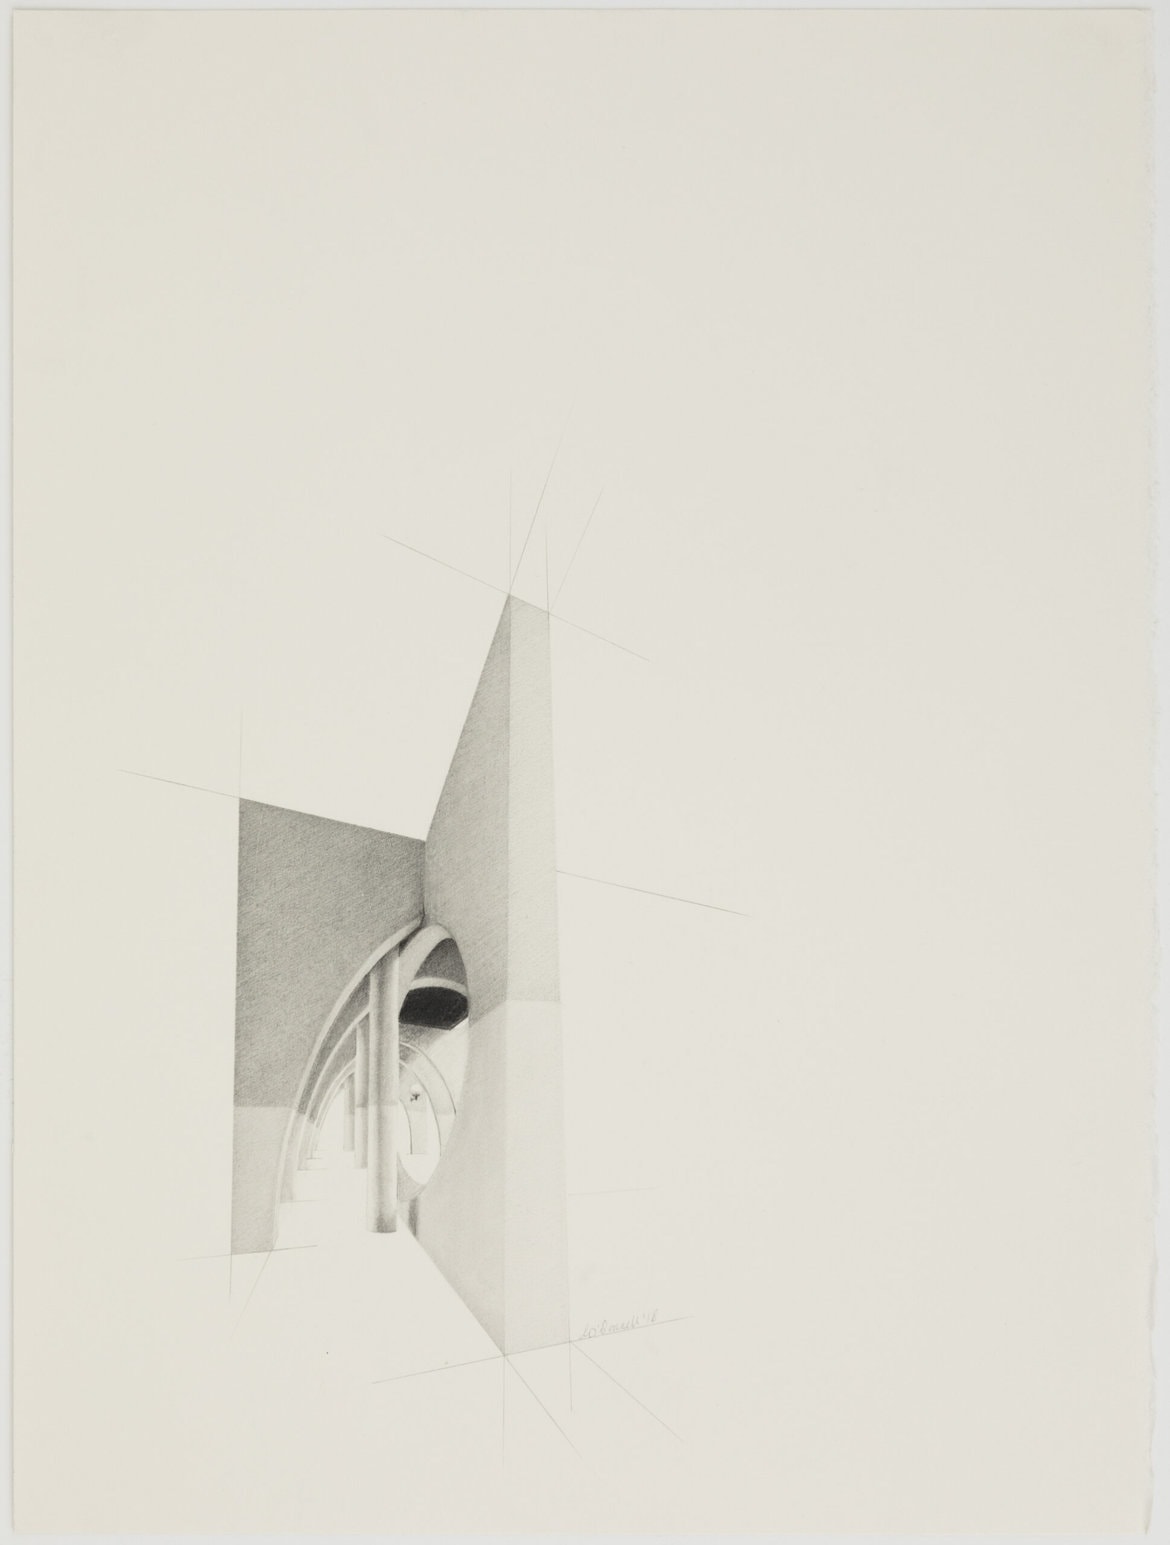 ‘Cité Spinoza, Paris #6’, 2018, pencil on paper, 46.5 x 36.5 cm, framed with museum glass